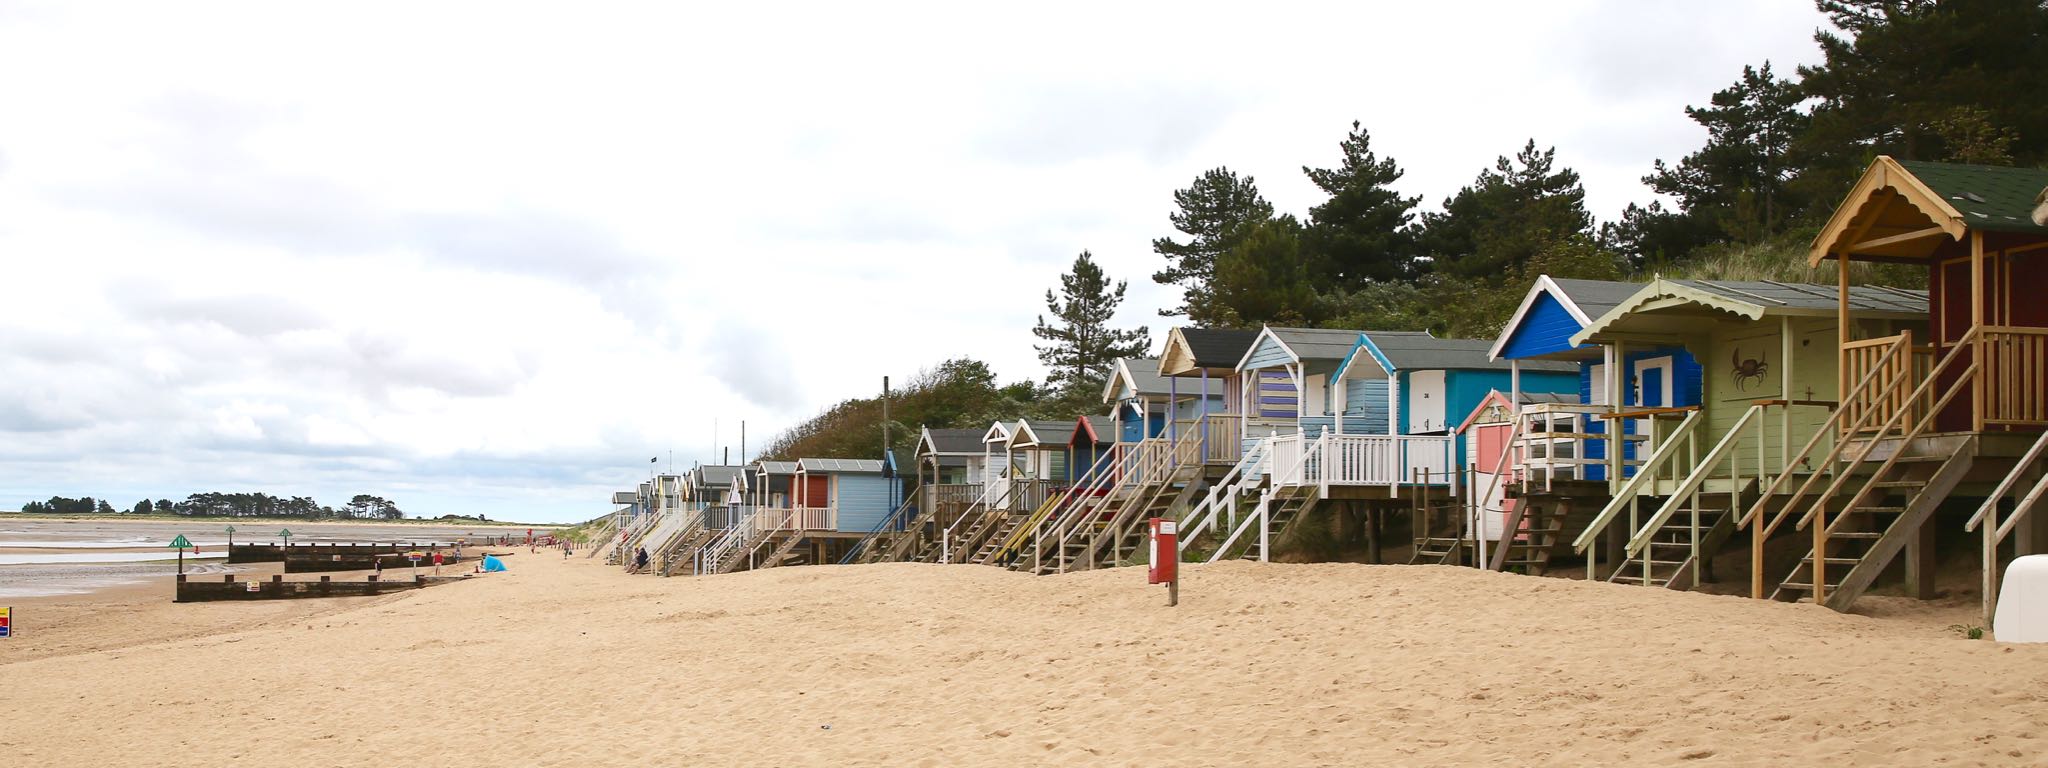 Beach Huts, Wells-Next-The-Sea